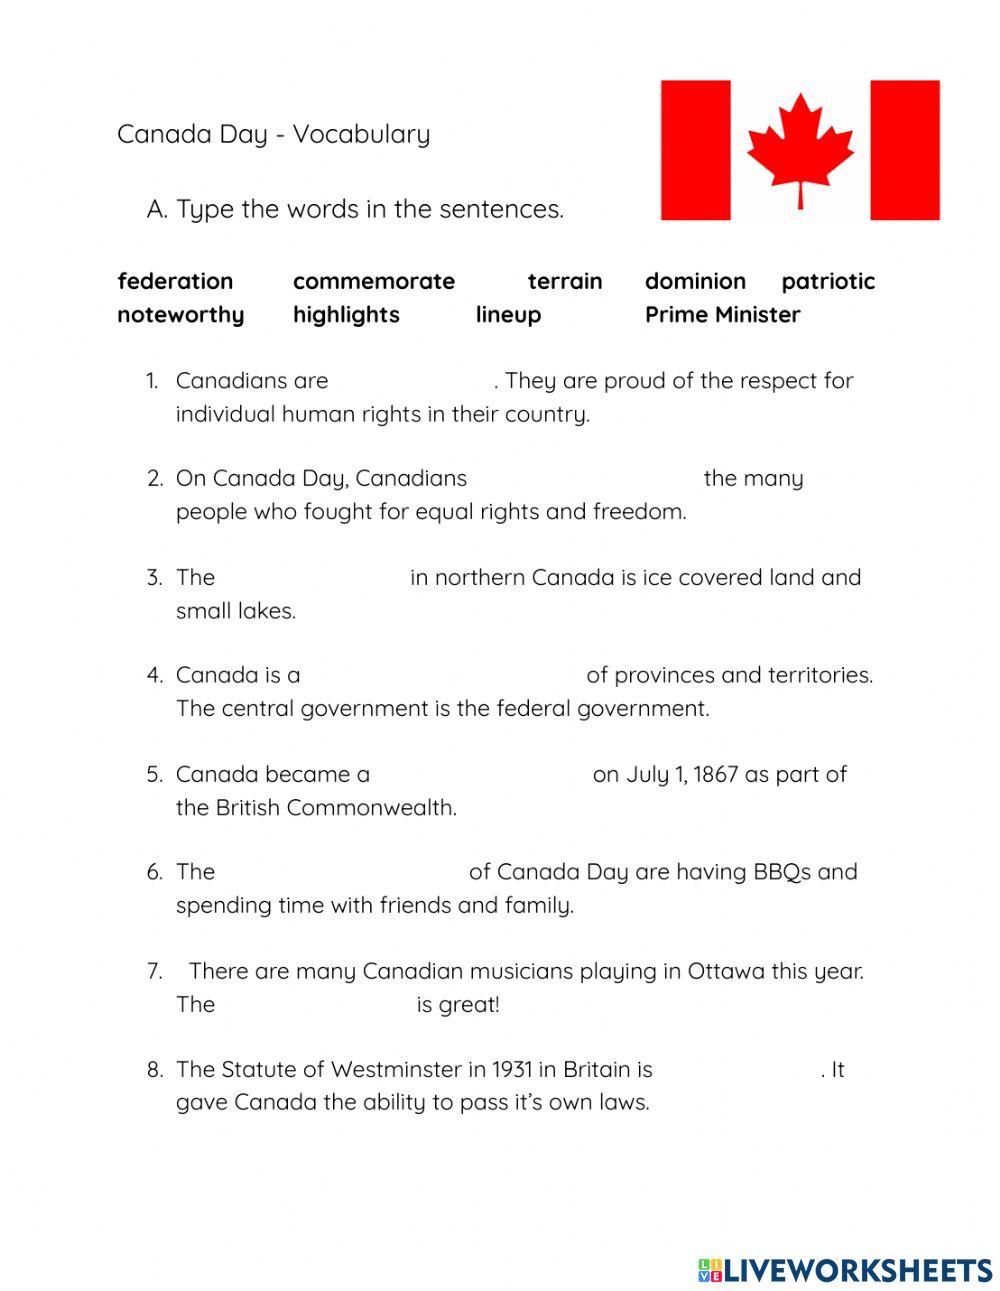 Canada Day Vocabulary